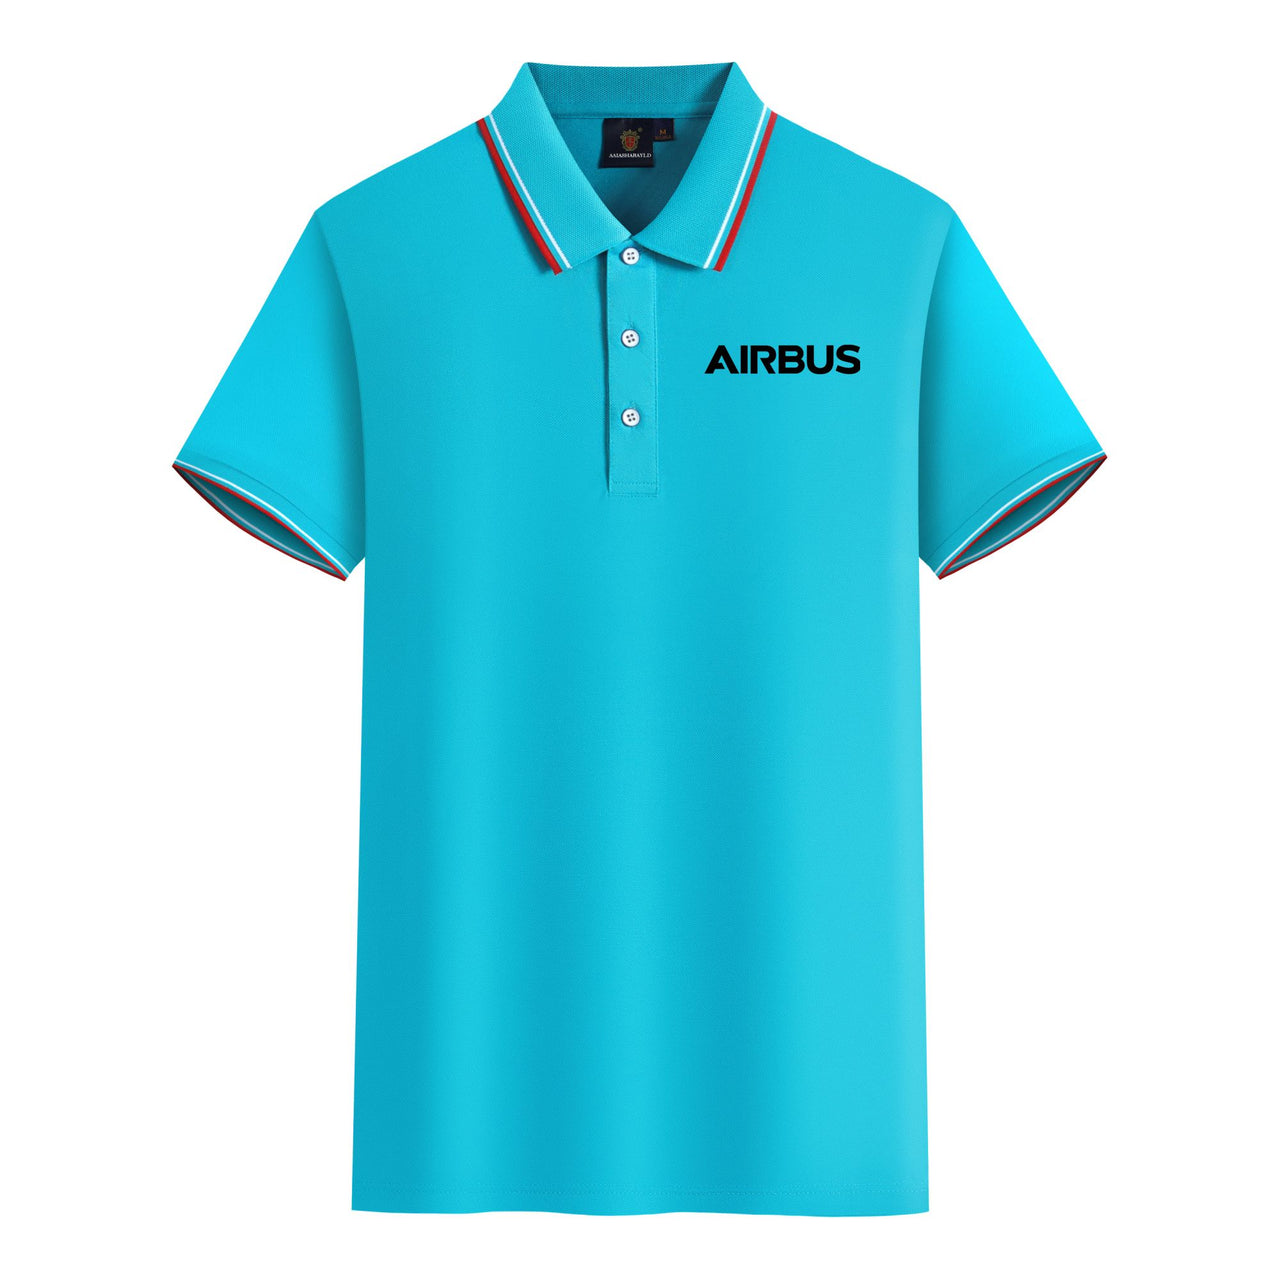 Airbus & Text Designed Stylish Polo T-Shirts